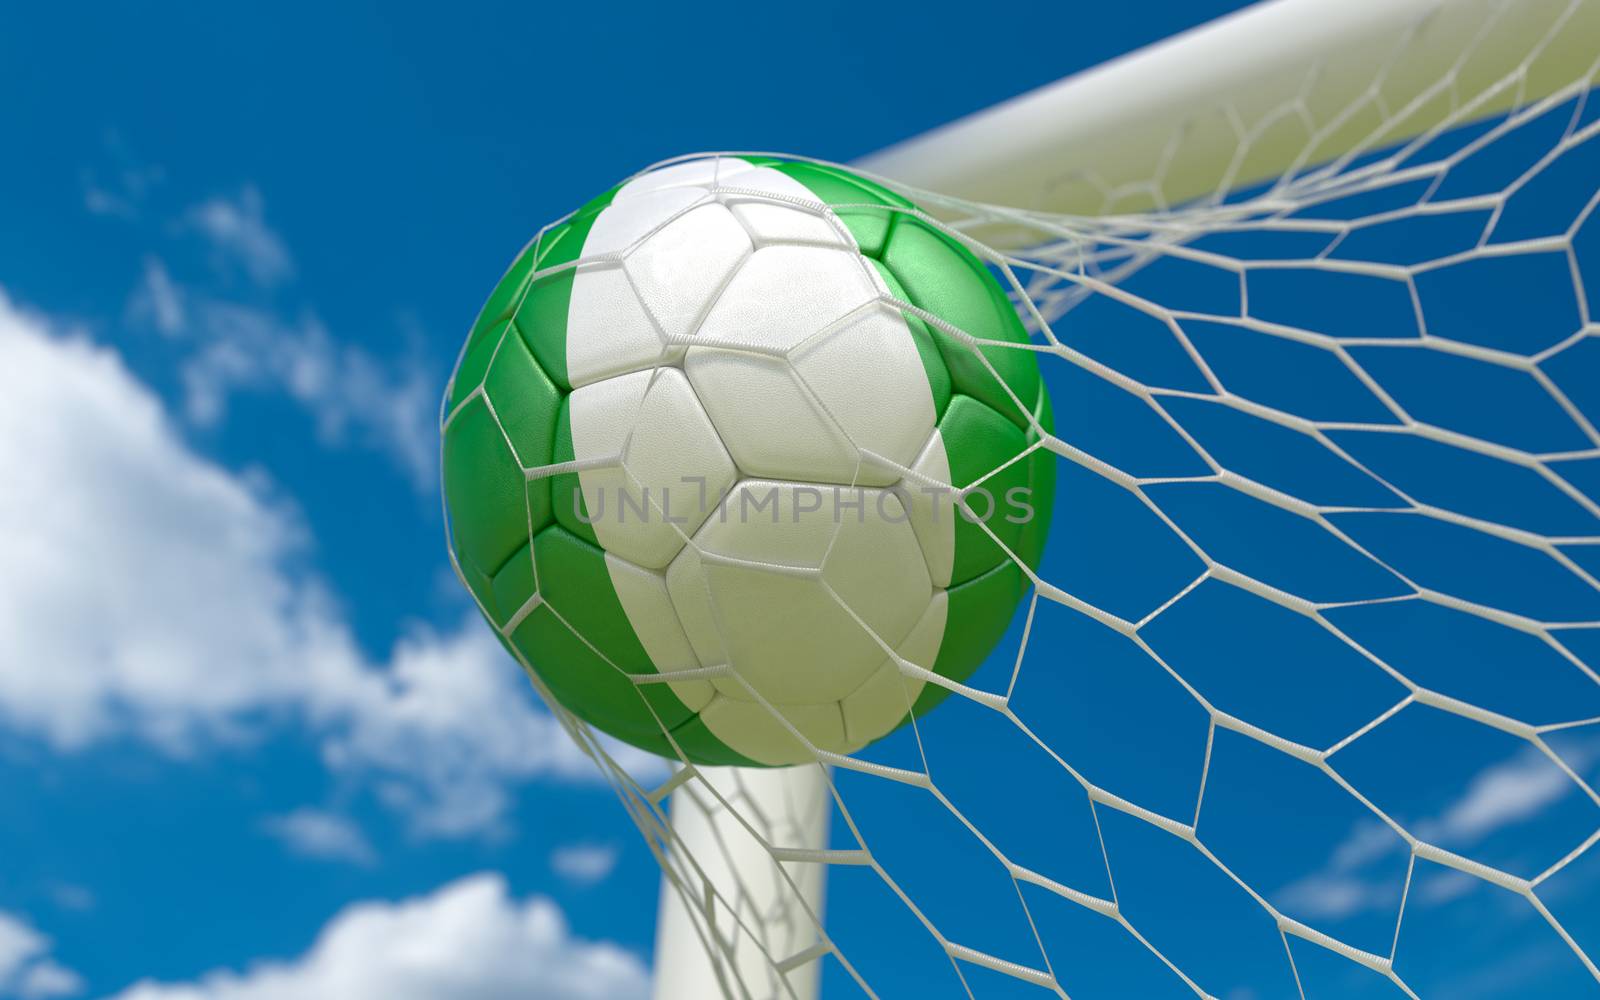 Nigeria flag and soccer ball in goal net by Barbraford